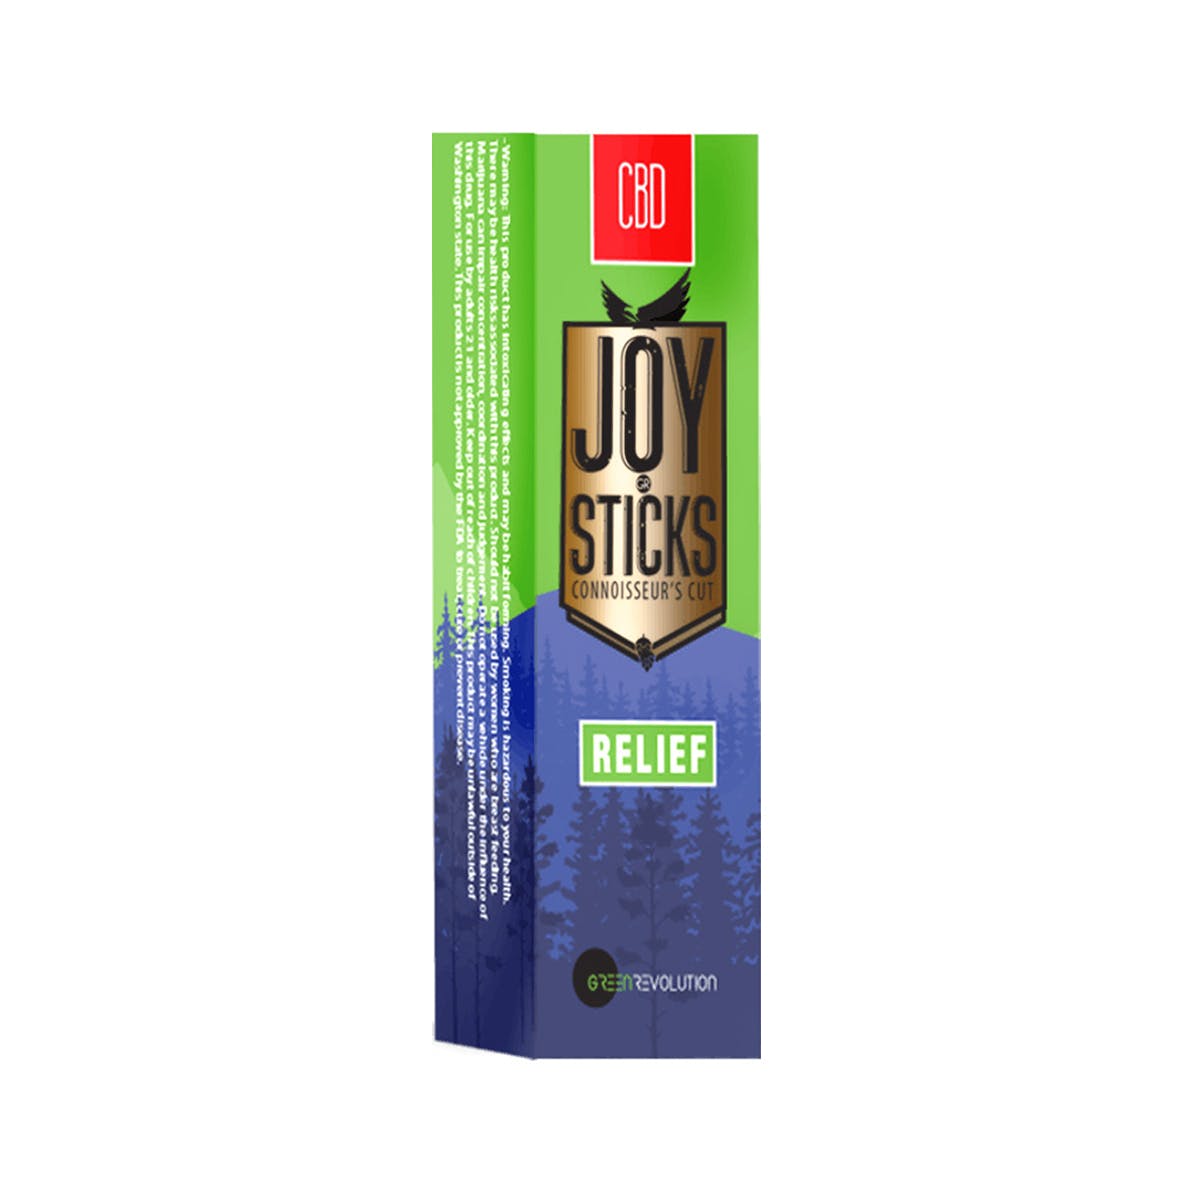 Joysticks - Relief 2x (1.8g)